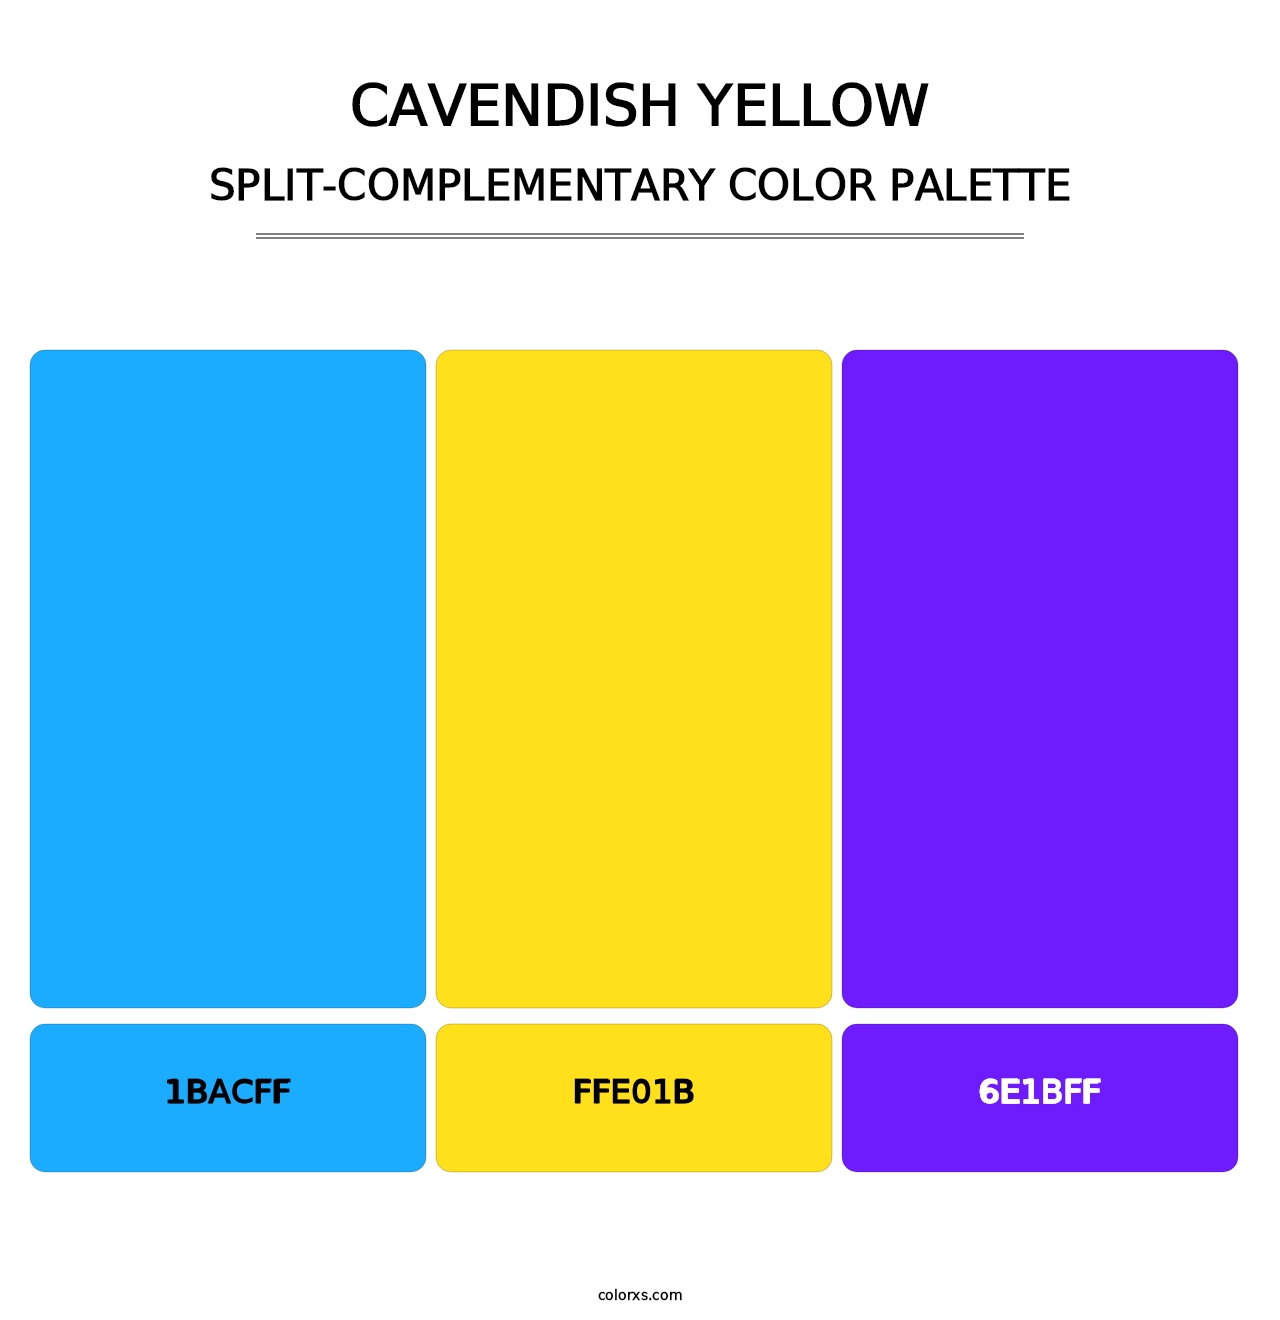 Cavendish Yellow - Split-Complementary Color Palette